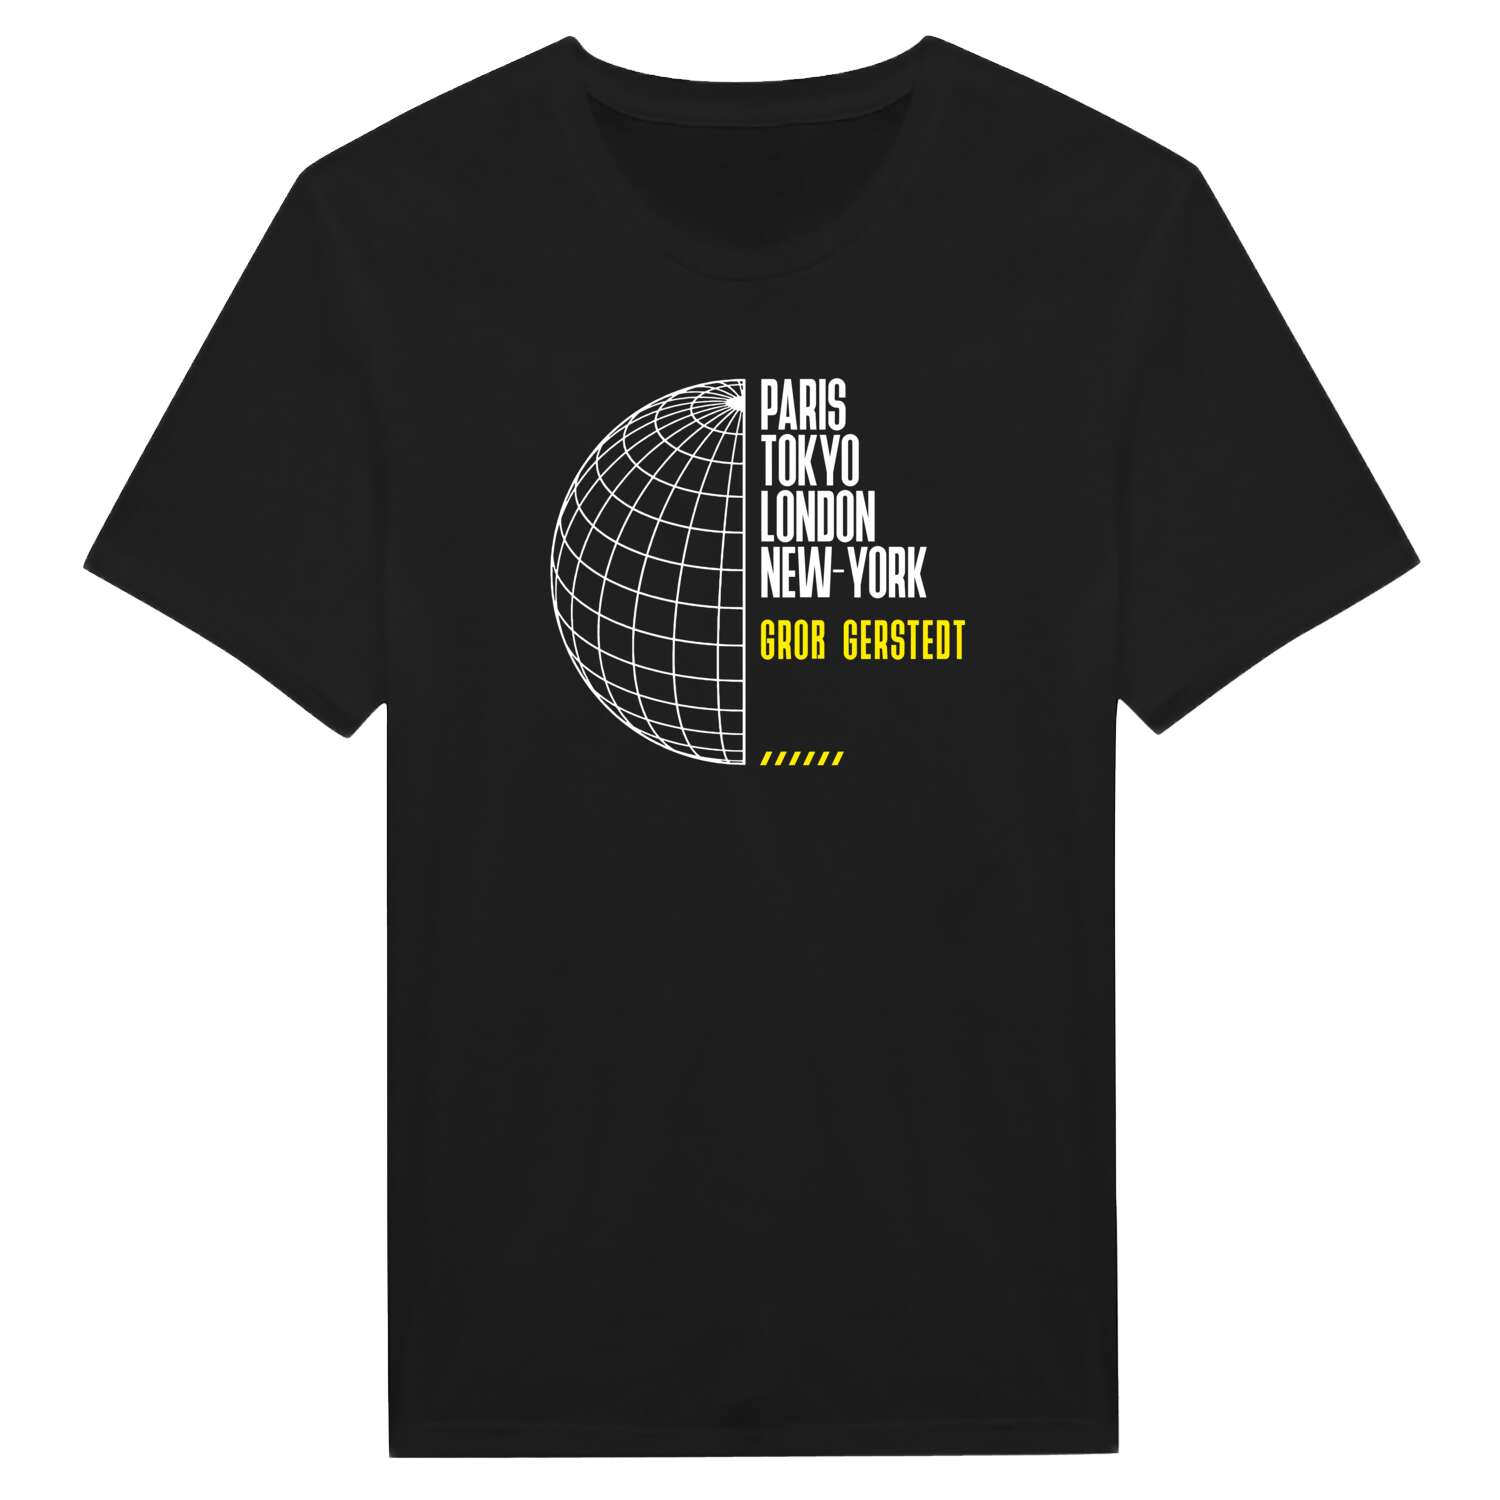 Groß Gerstedt T-Shirt »Paris Tokyo London«